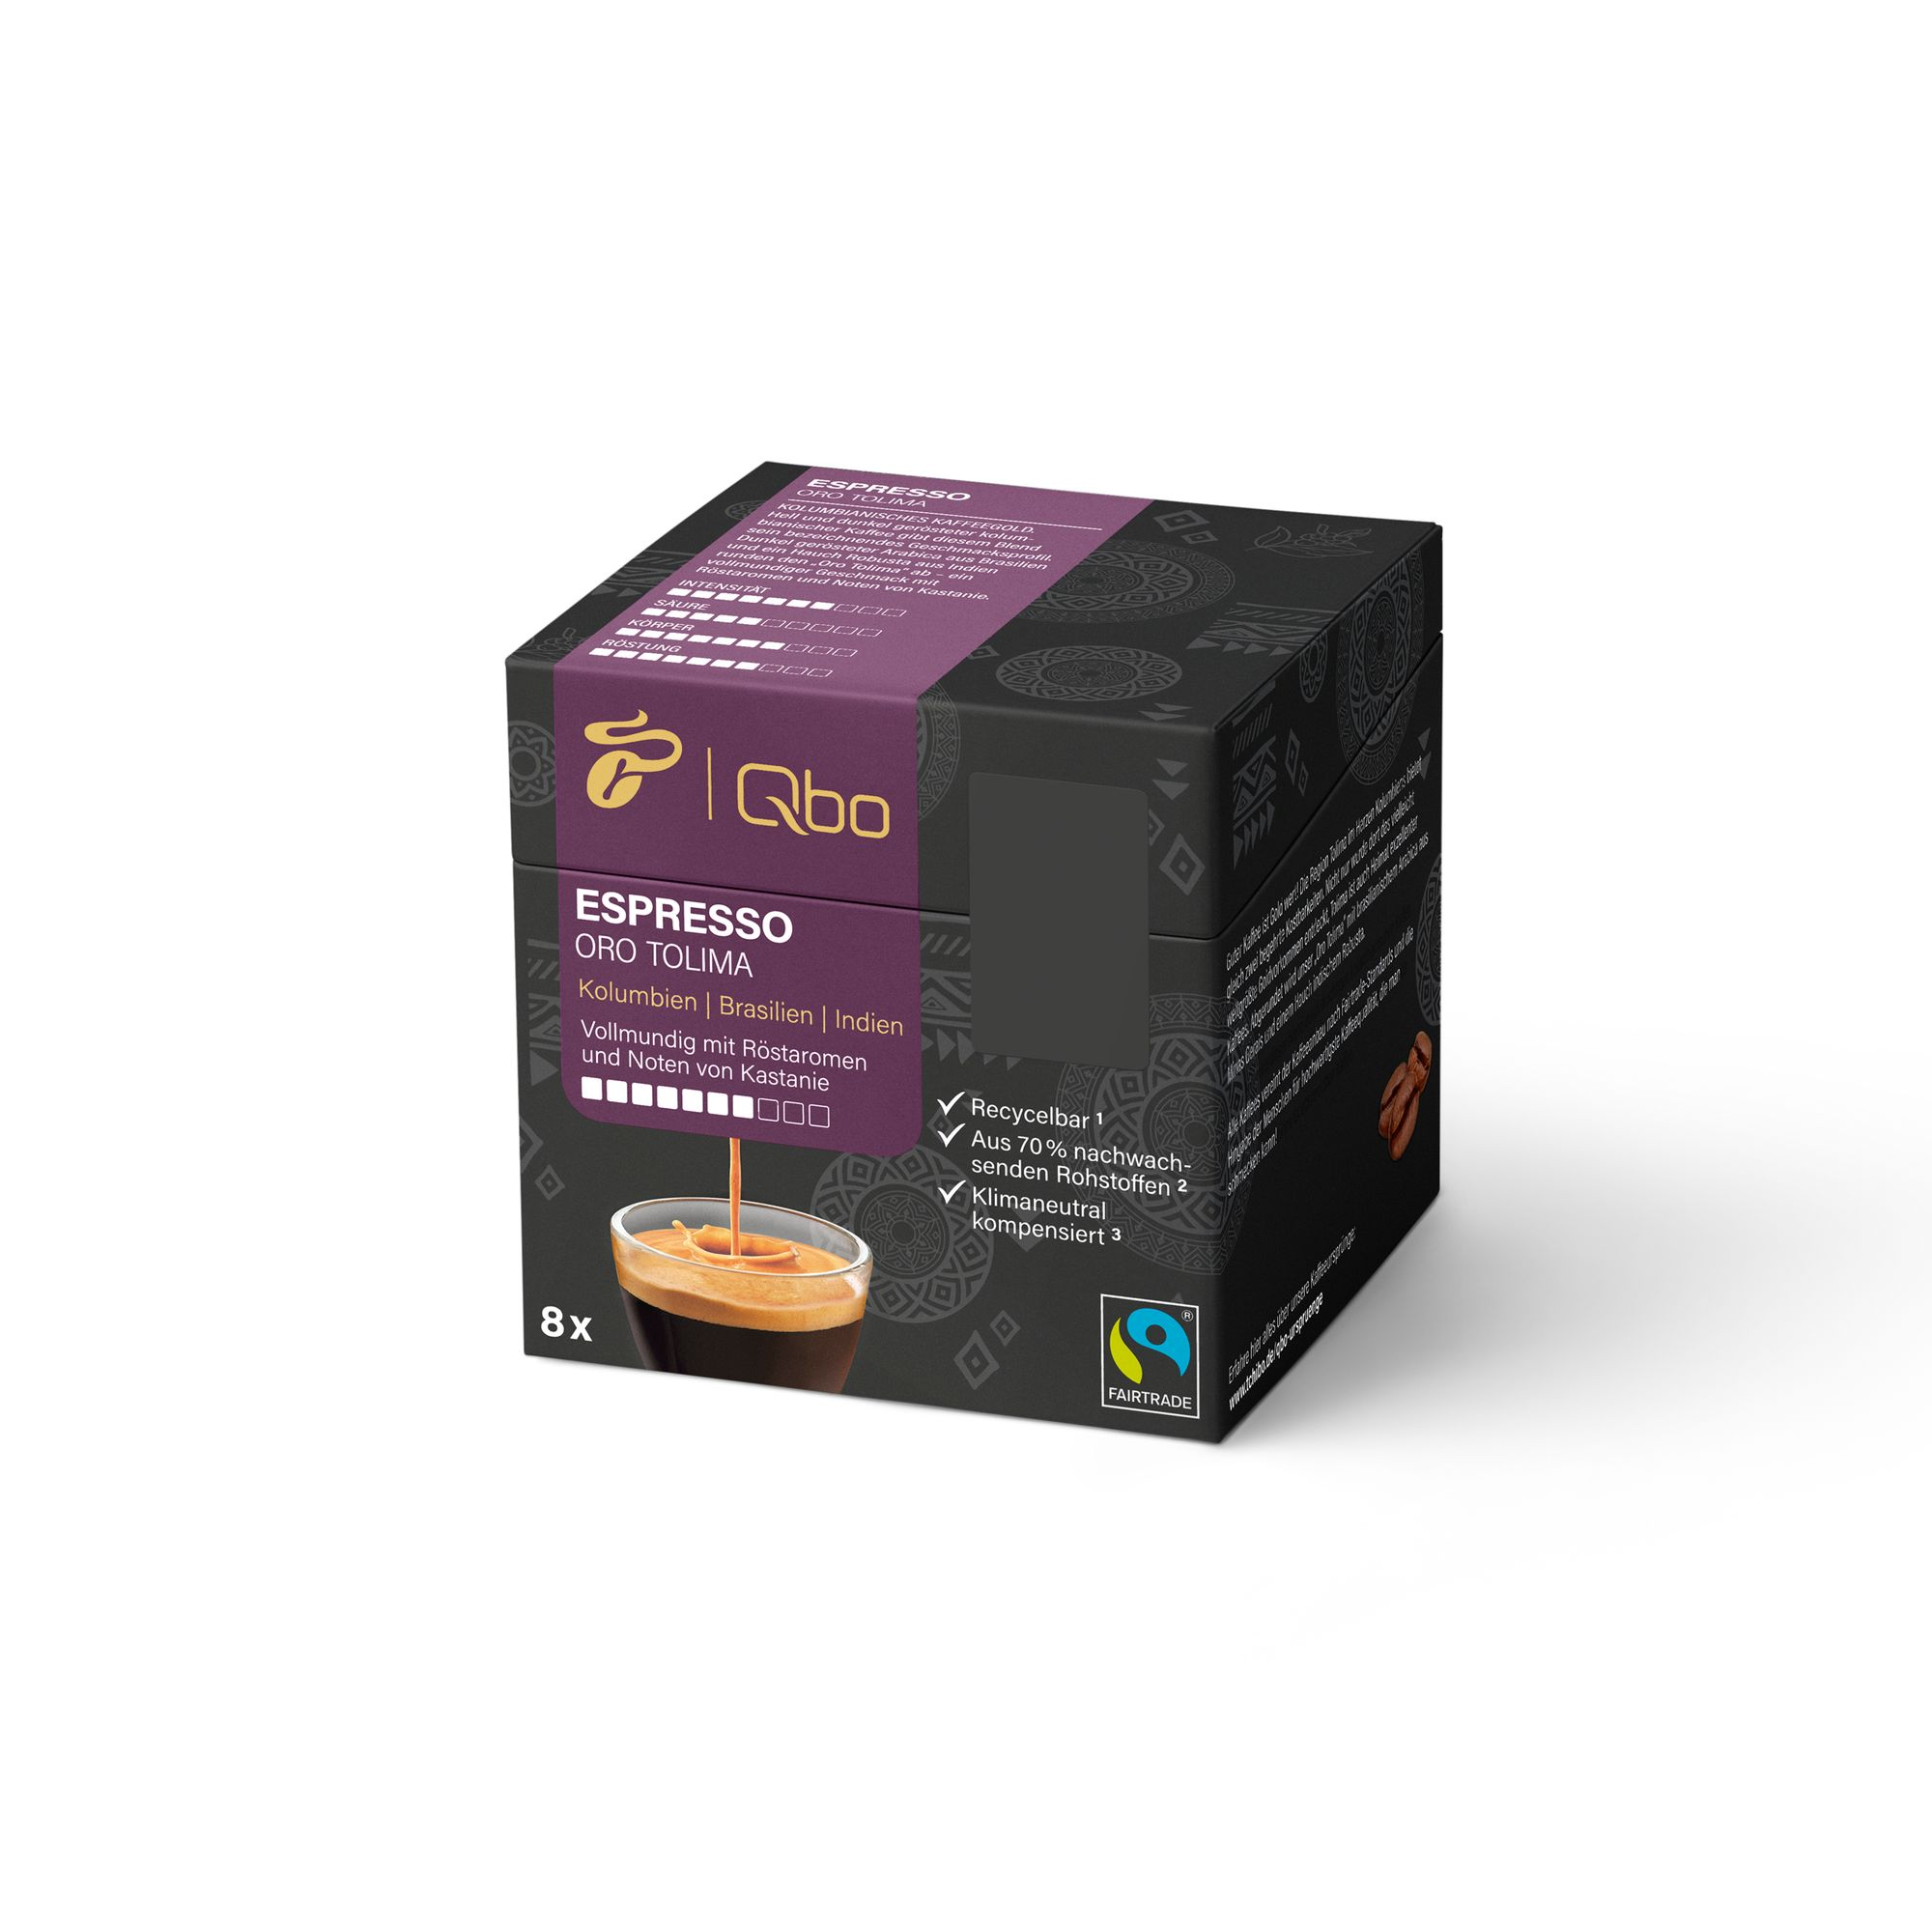 Kapselsystem) Espresso Tolima 8 Stück 526012 QBO Oro Qbo Kaffeekapseln TCHIBO (Tchibo